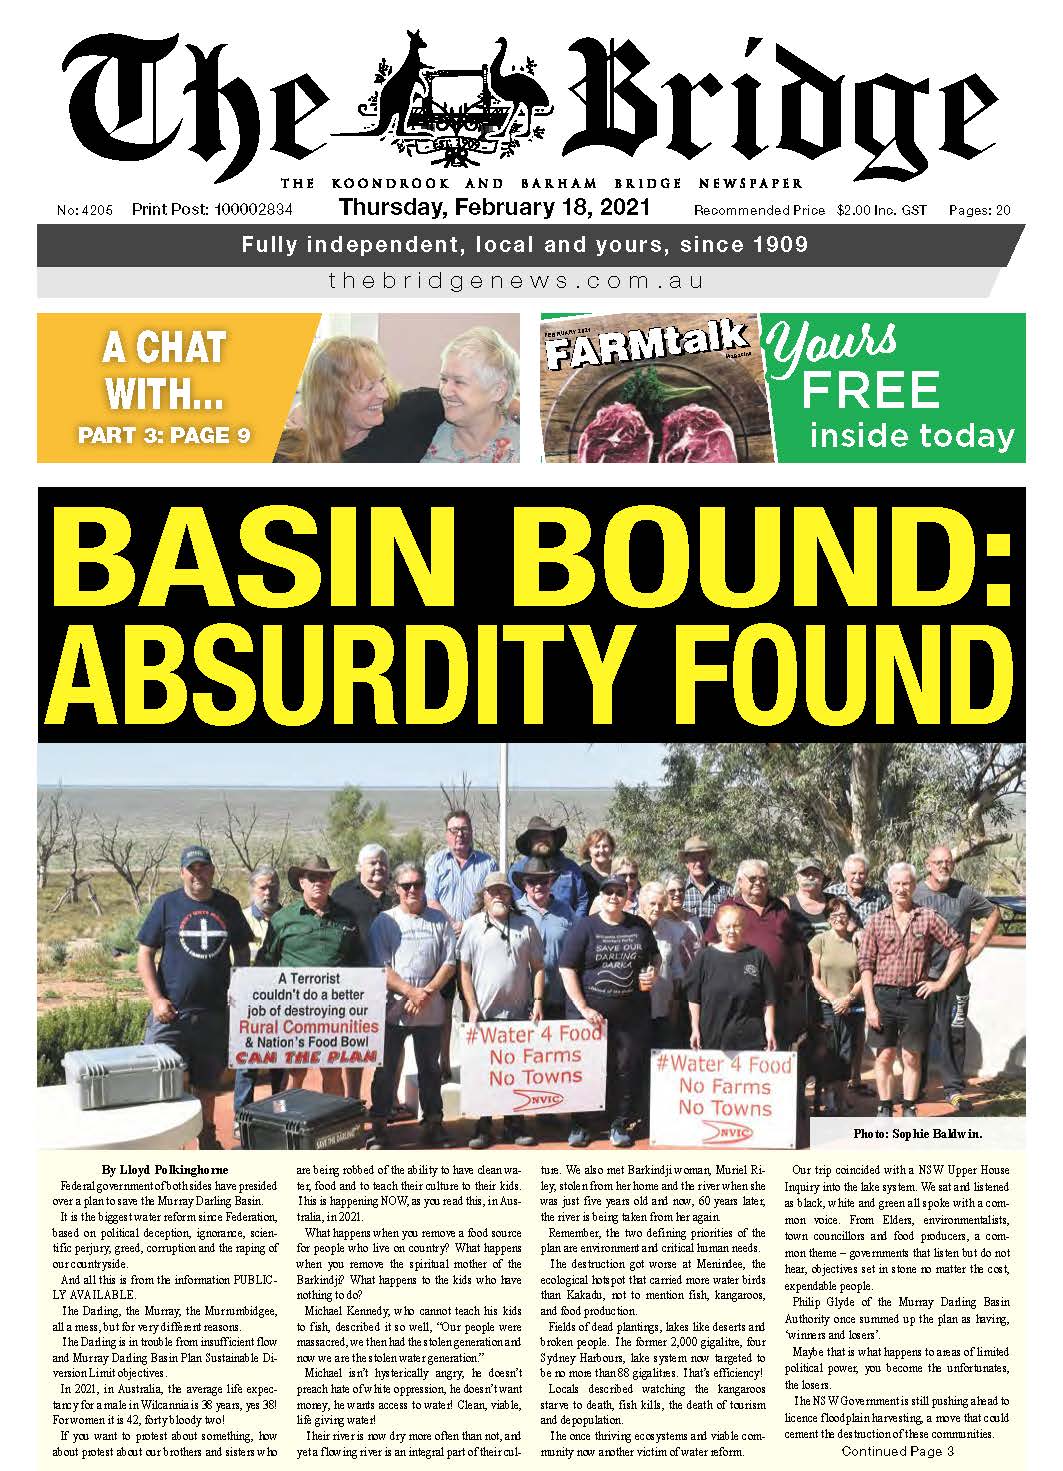 The Koondrook and Barham Bridge Newspaper 18 February 2021